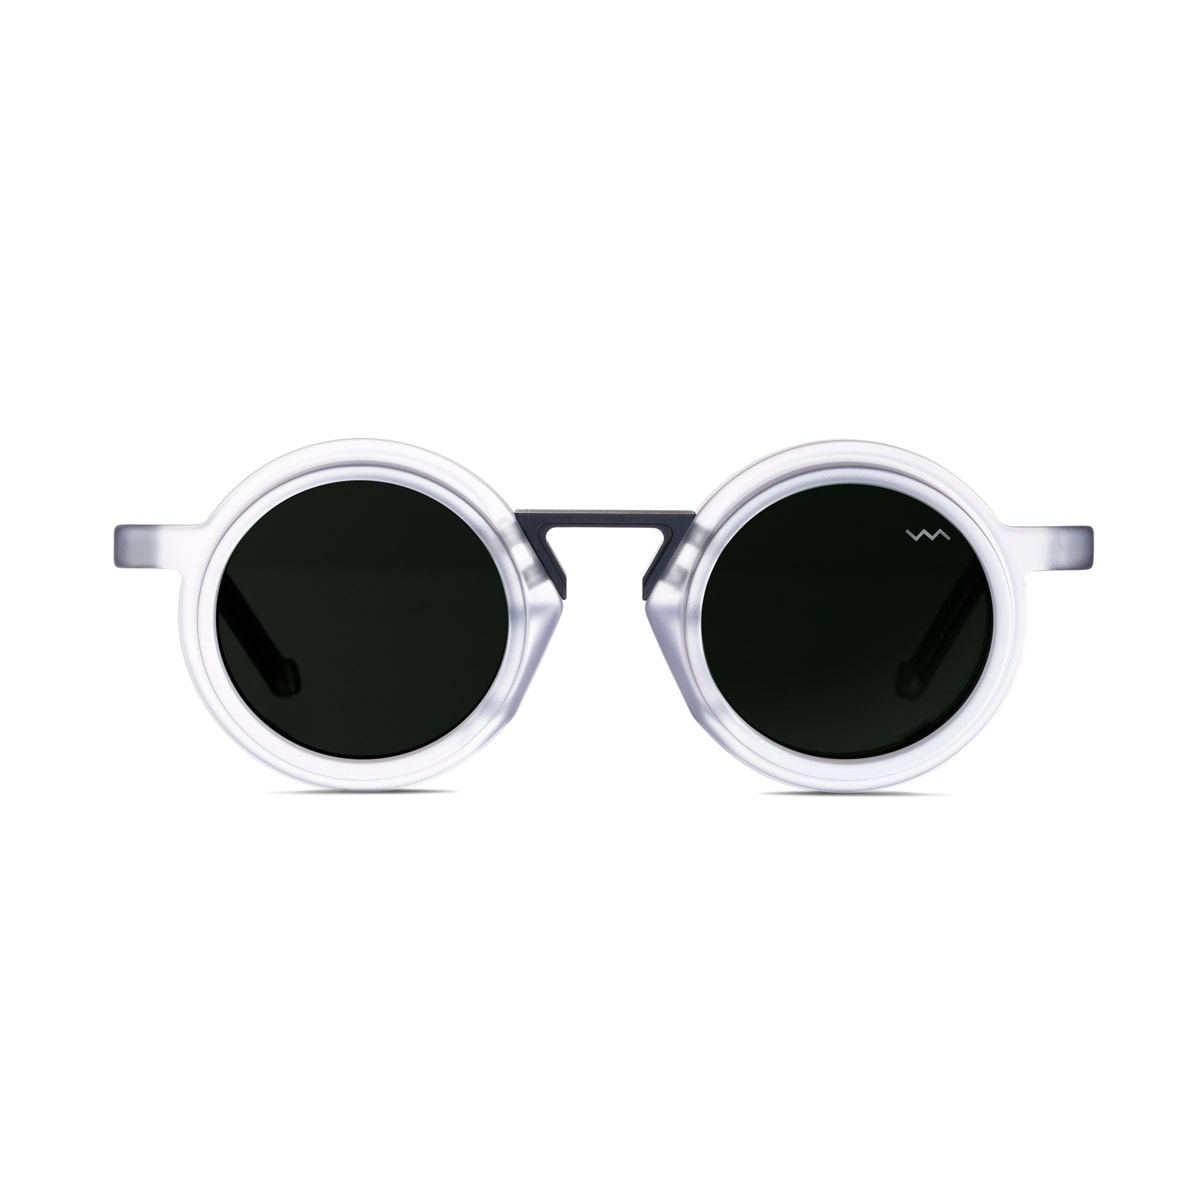 Wl0058 White Label Crystal Matte Sunglasses